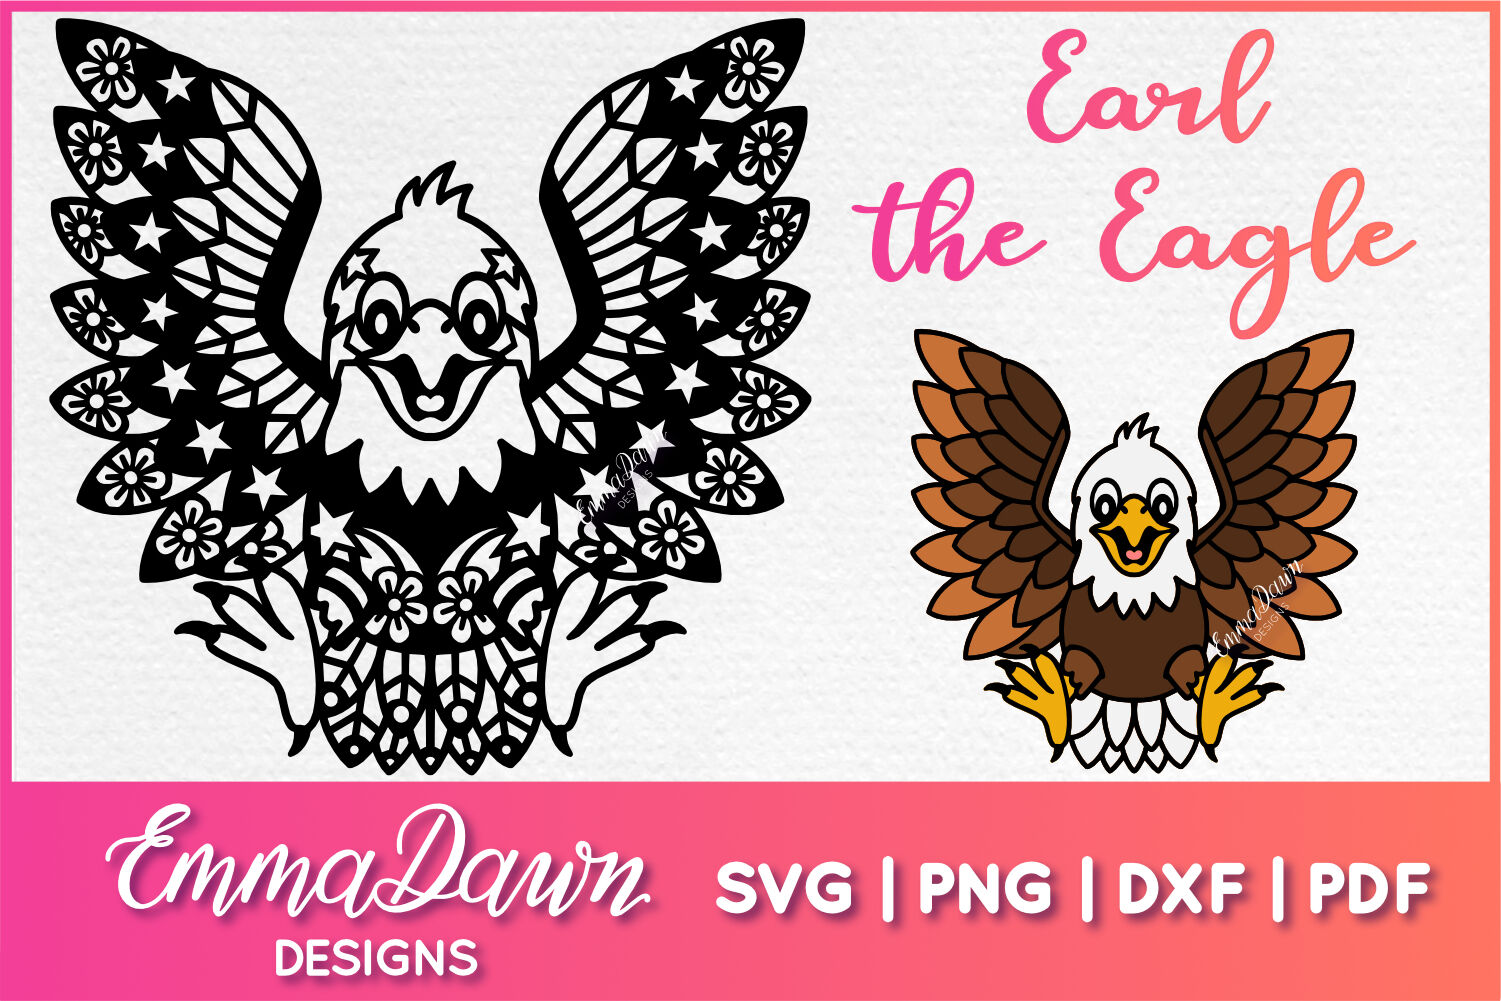 Earl The Eagle Svg Dxf Fcm Png Pdf Mandala Zentangle Design By Emma Dawn Designs Thehungryjpeg Com